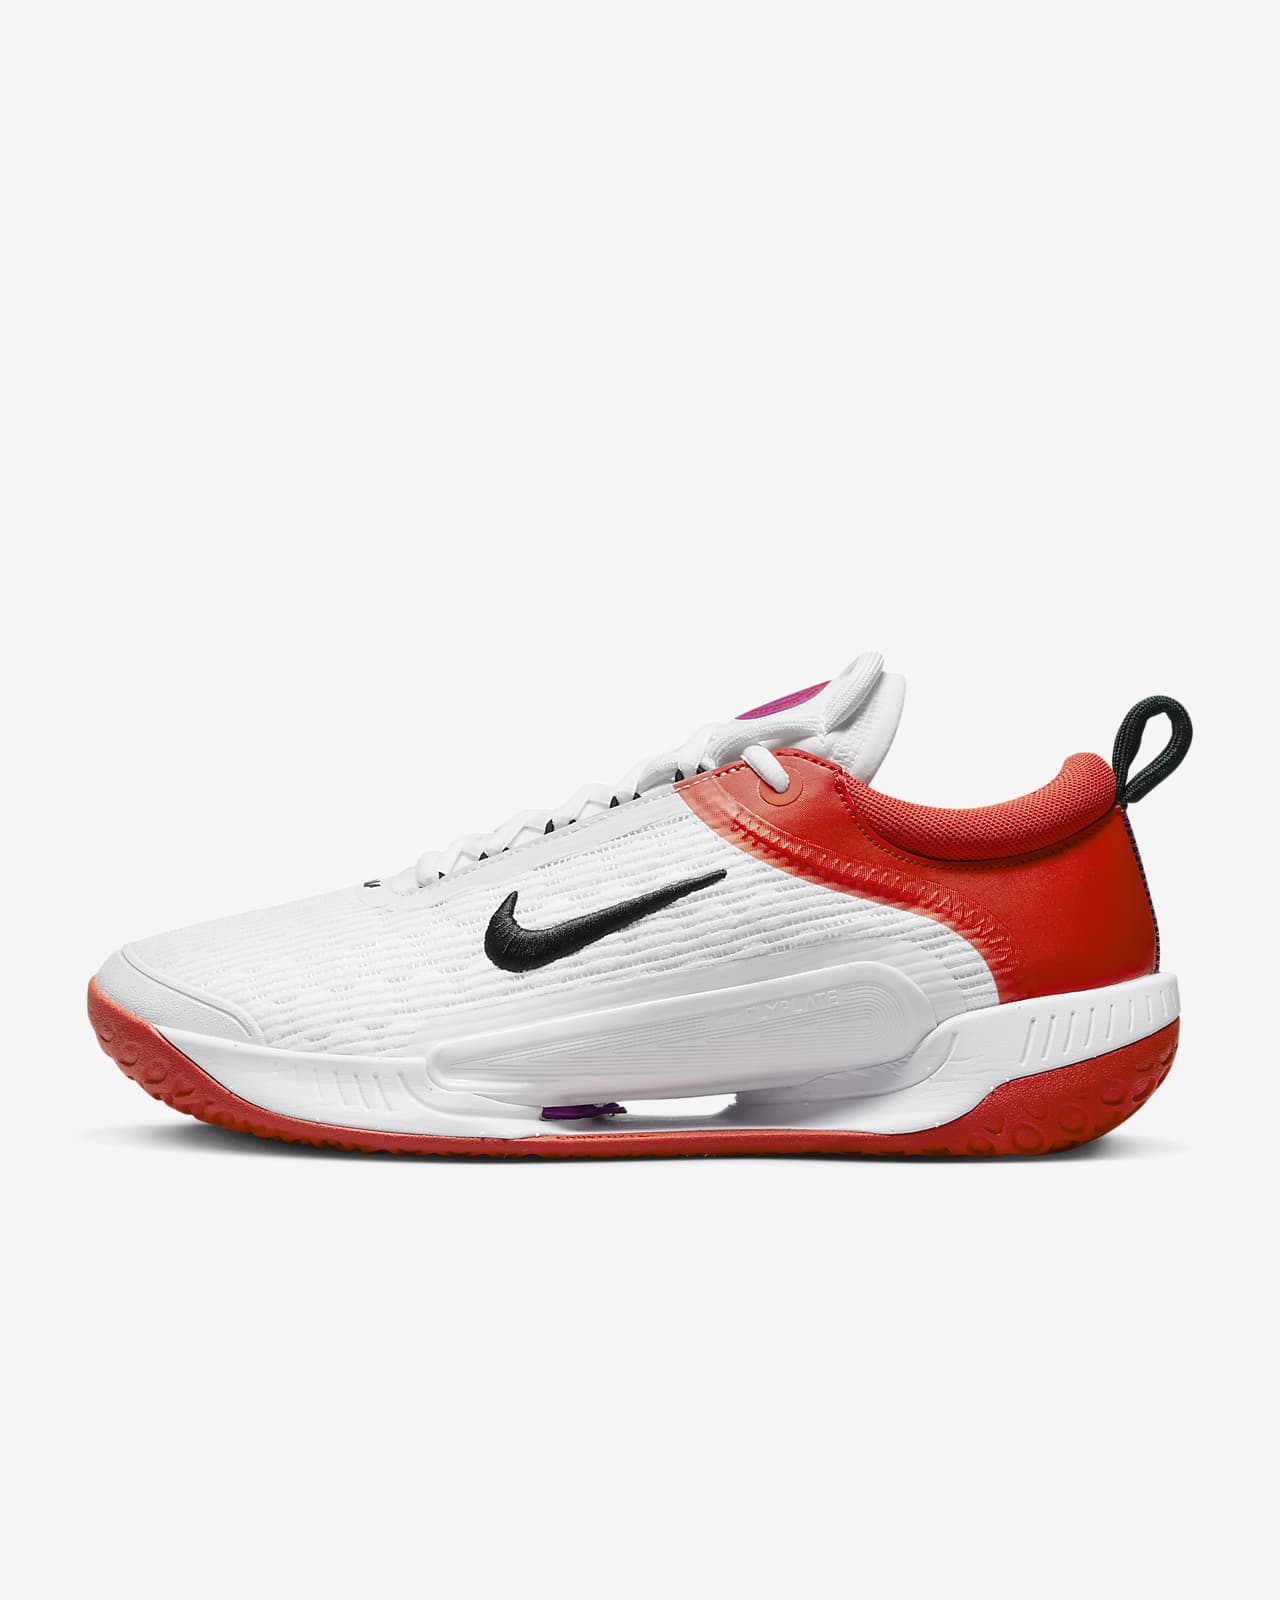 NikeCourt Air Zoom NXT Men's Hard Court Tennis Shoes